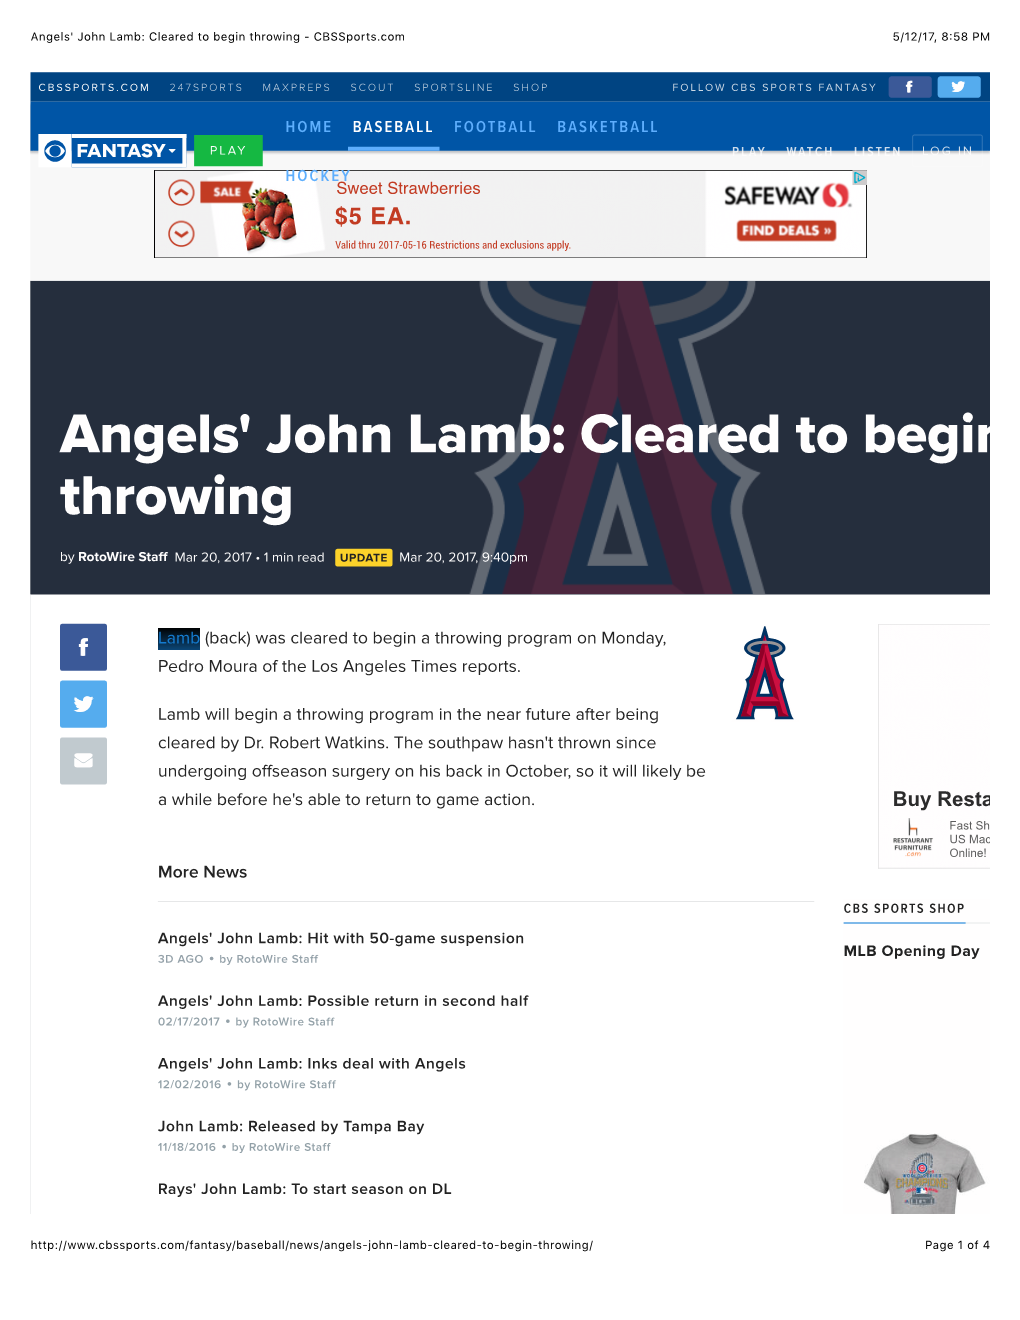 Angels' John Lamb: Cleared to Begin Throwing - Cbssports.Com 5/12/17, 8�58 PM